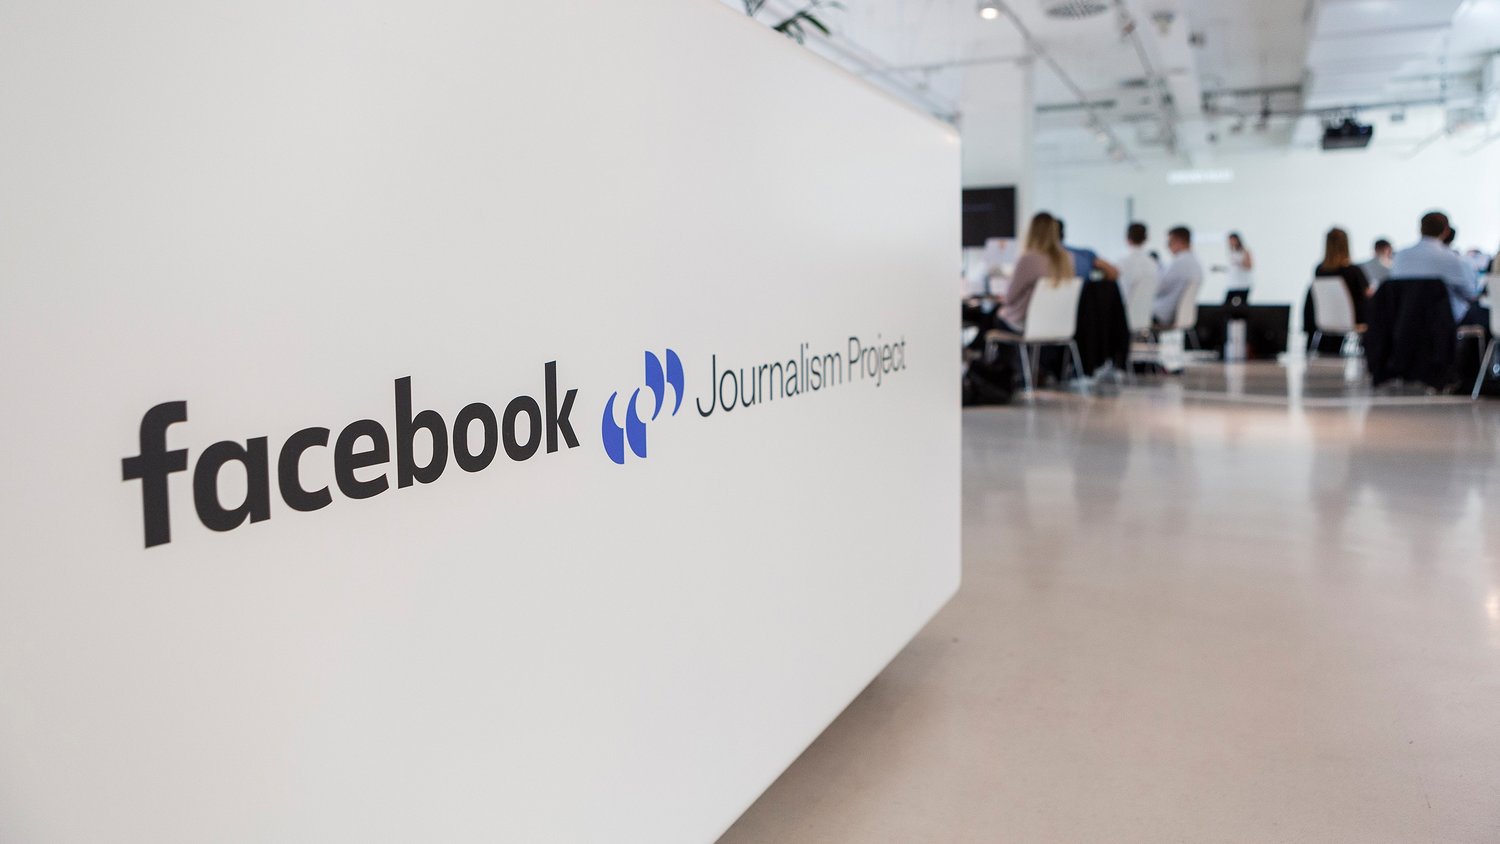 Facebook Accelerator Berlin, Facebook Journalism Project